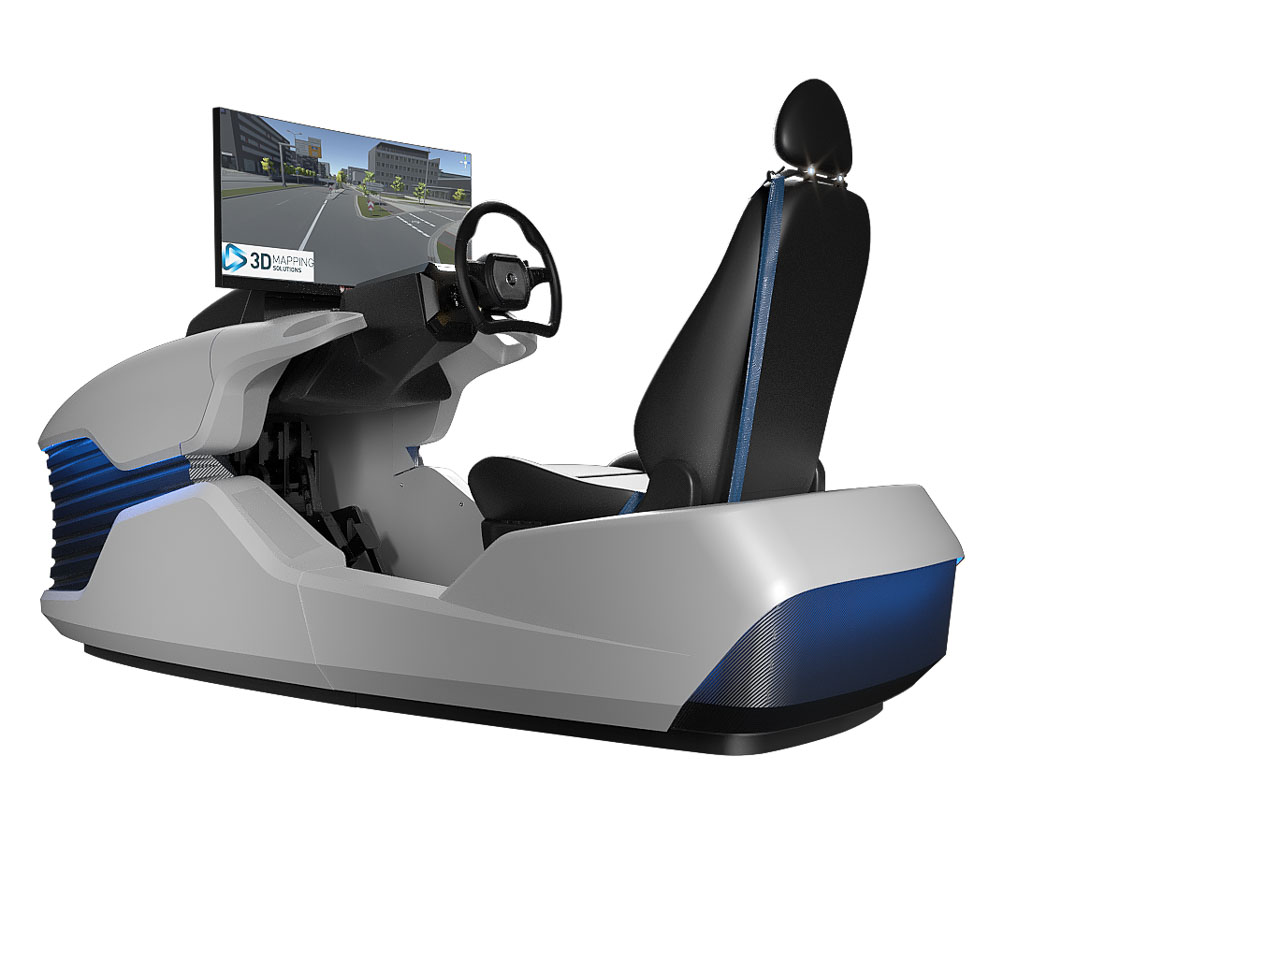 aSR introduces the aSR Driving Simulator - aSR